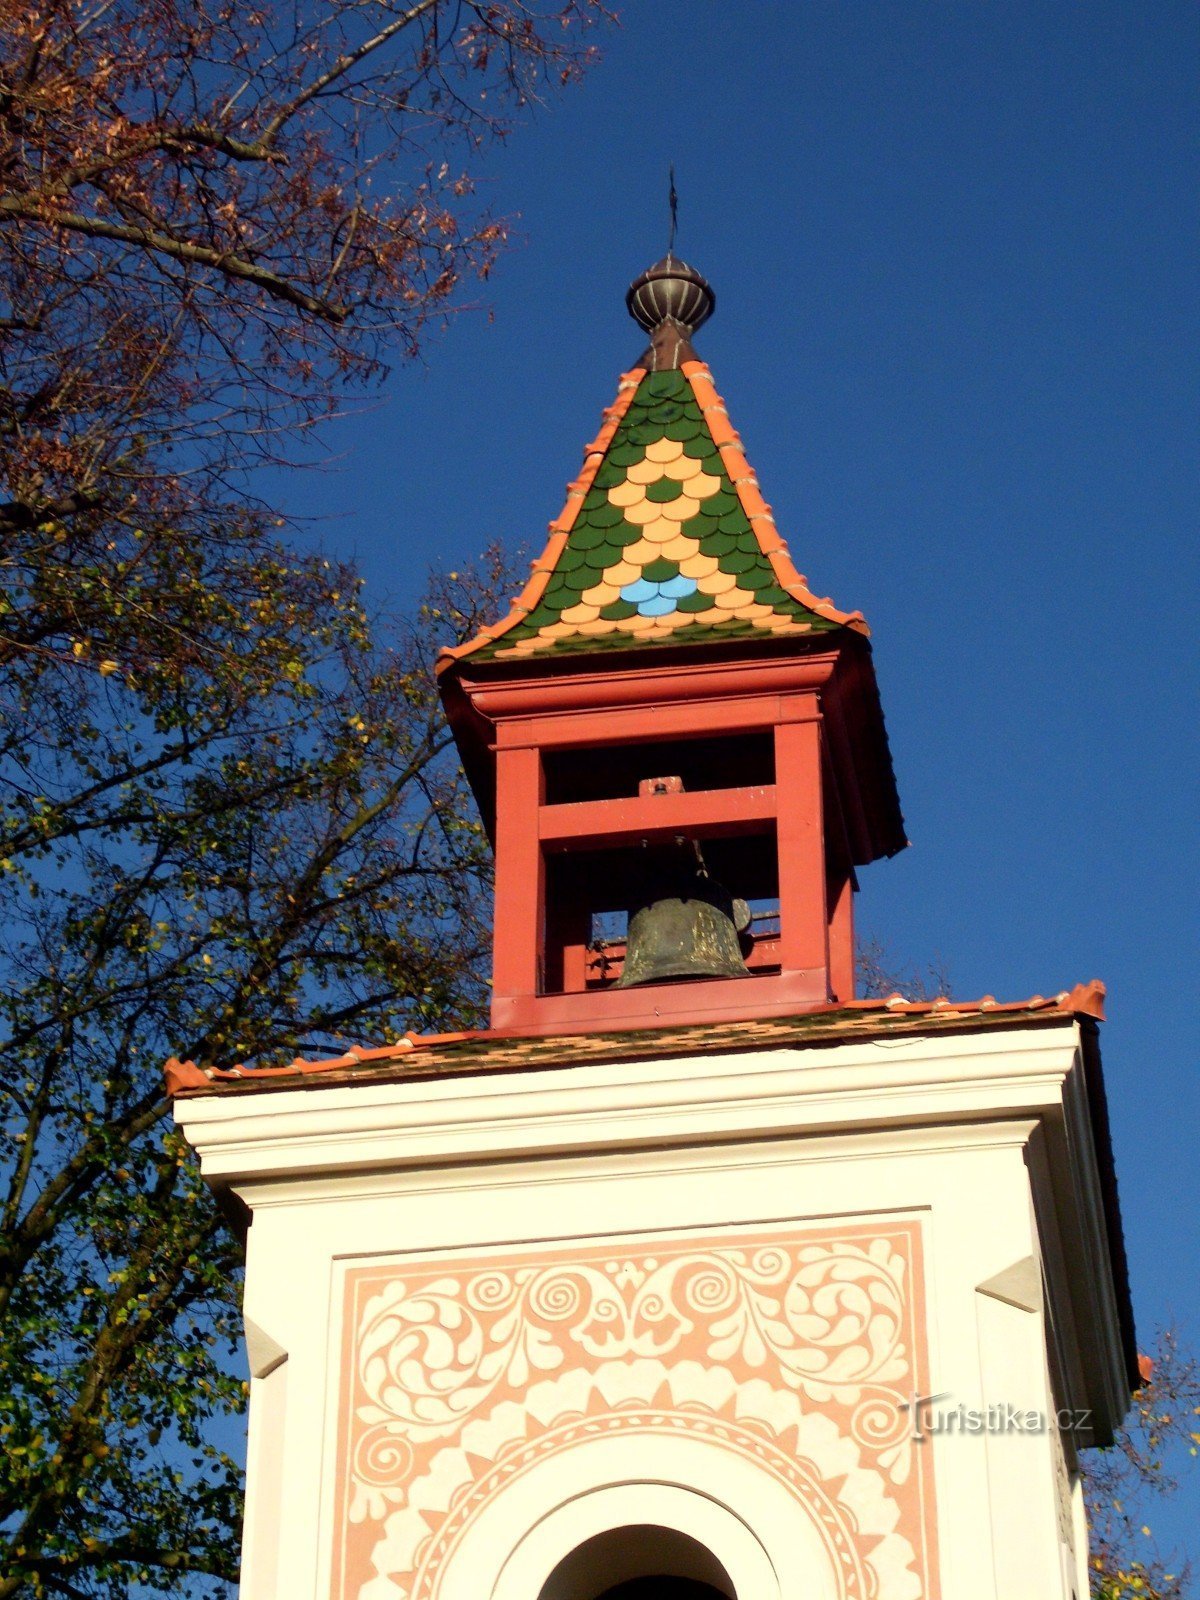 Uherský Ostroh - tháp chuông